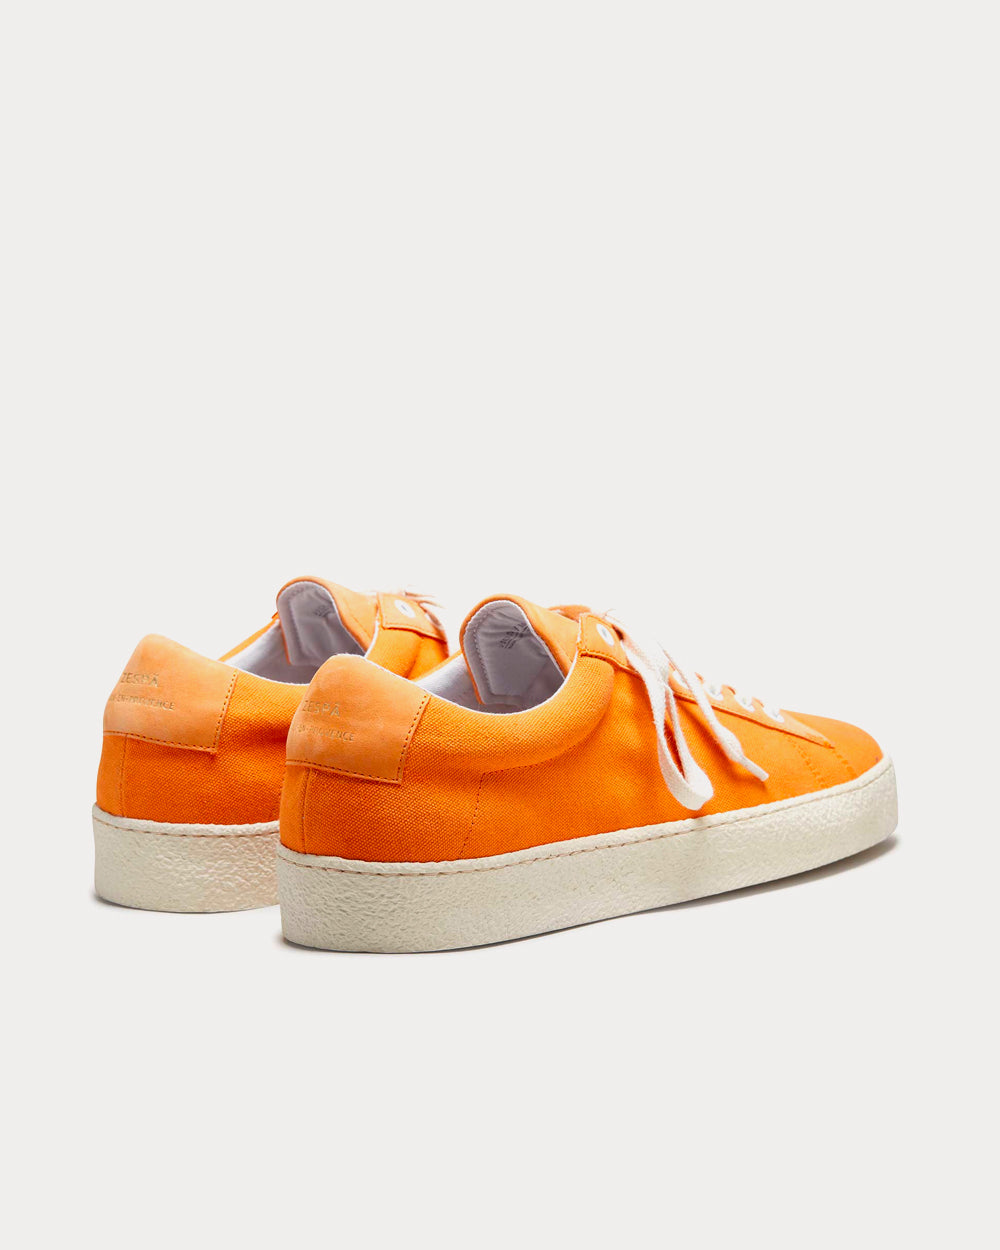 Zespa - ZSPRT Toile Coton Orange Clair Low Top Sneakers